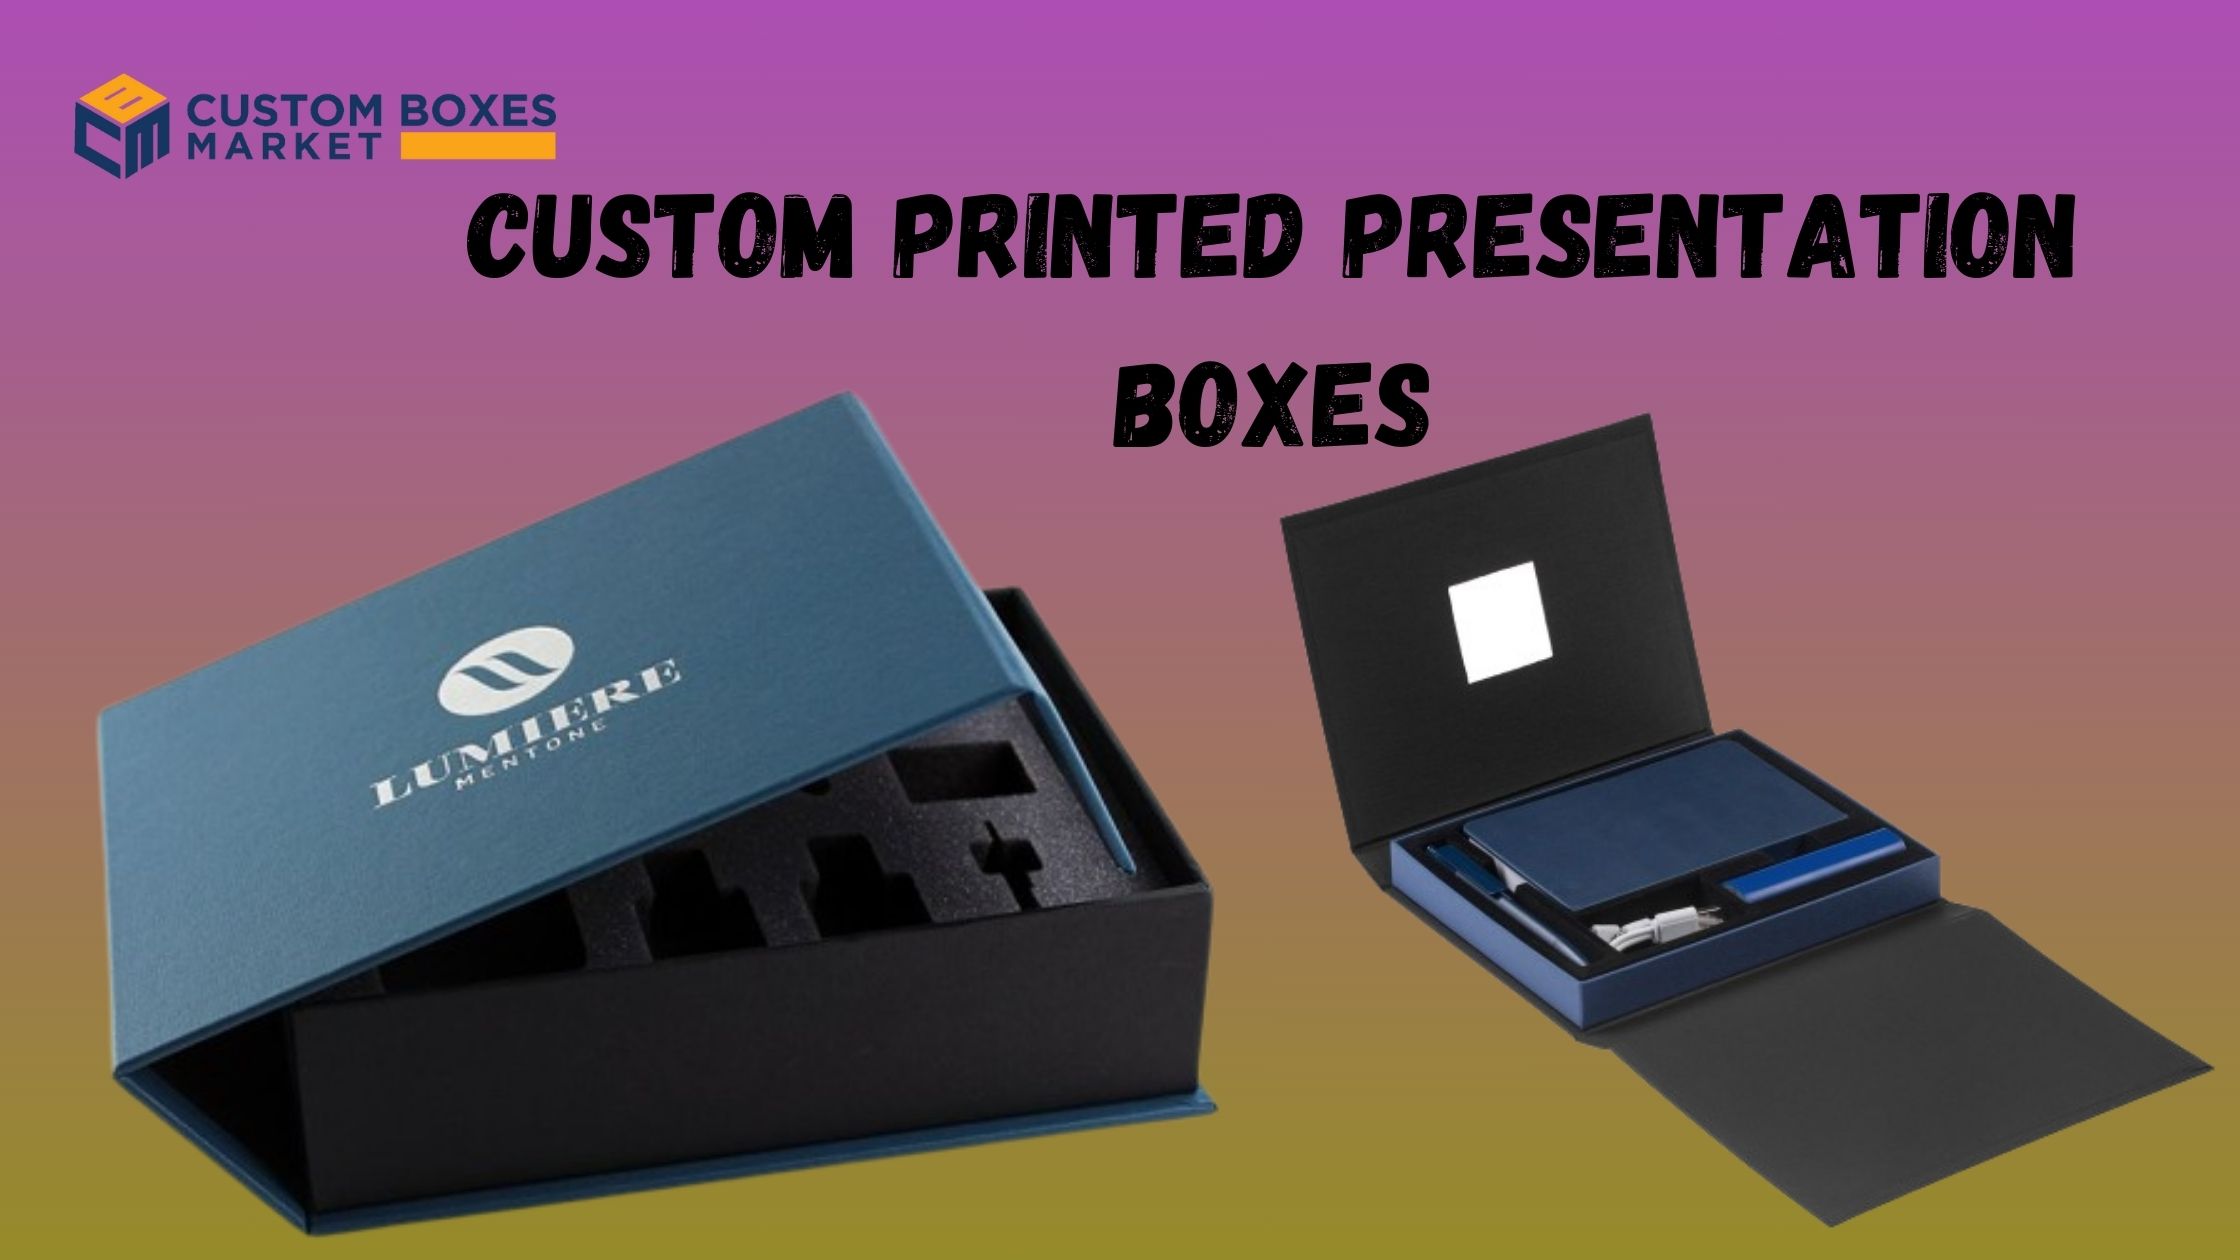 Custom Printed Presentation Boxes for Impressive Product Display